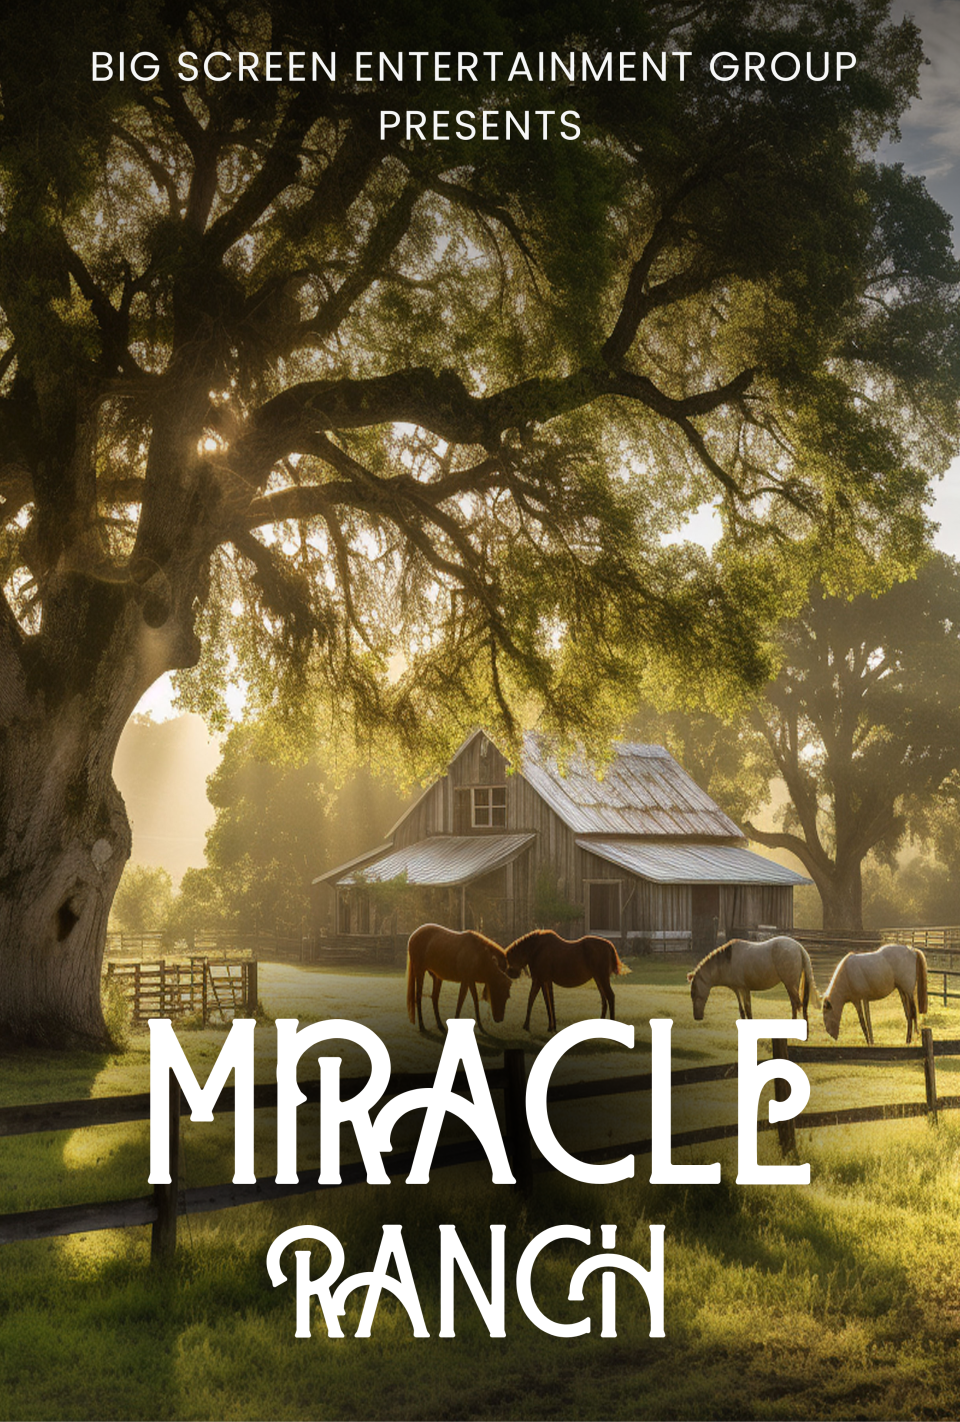 Big Screen Entertainment Group's - Miracle Ranch by award winning screenwriter, Mark Cramer